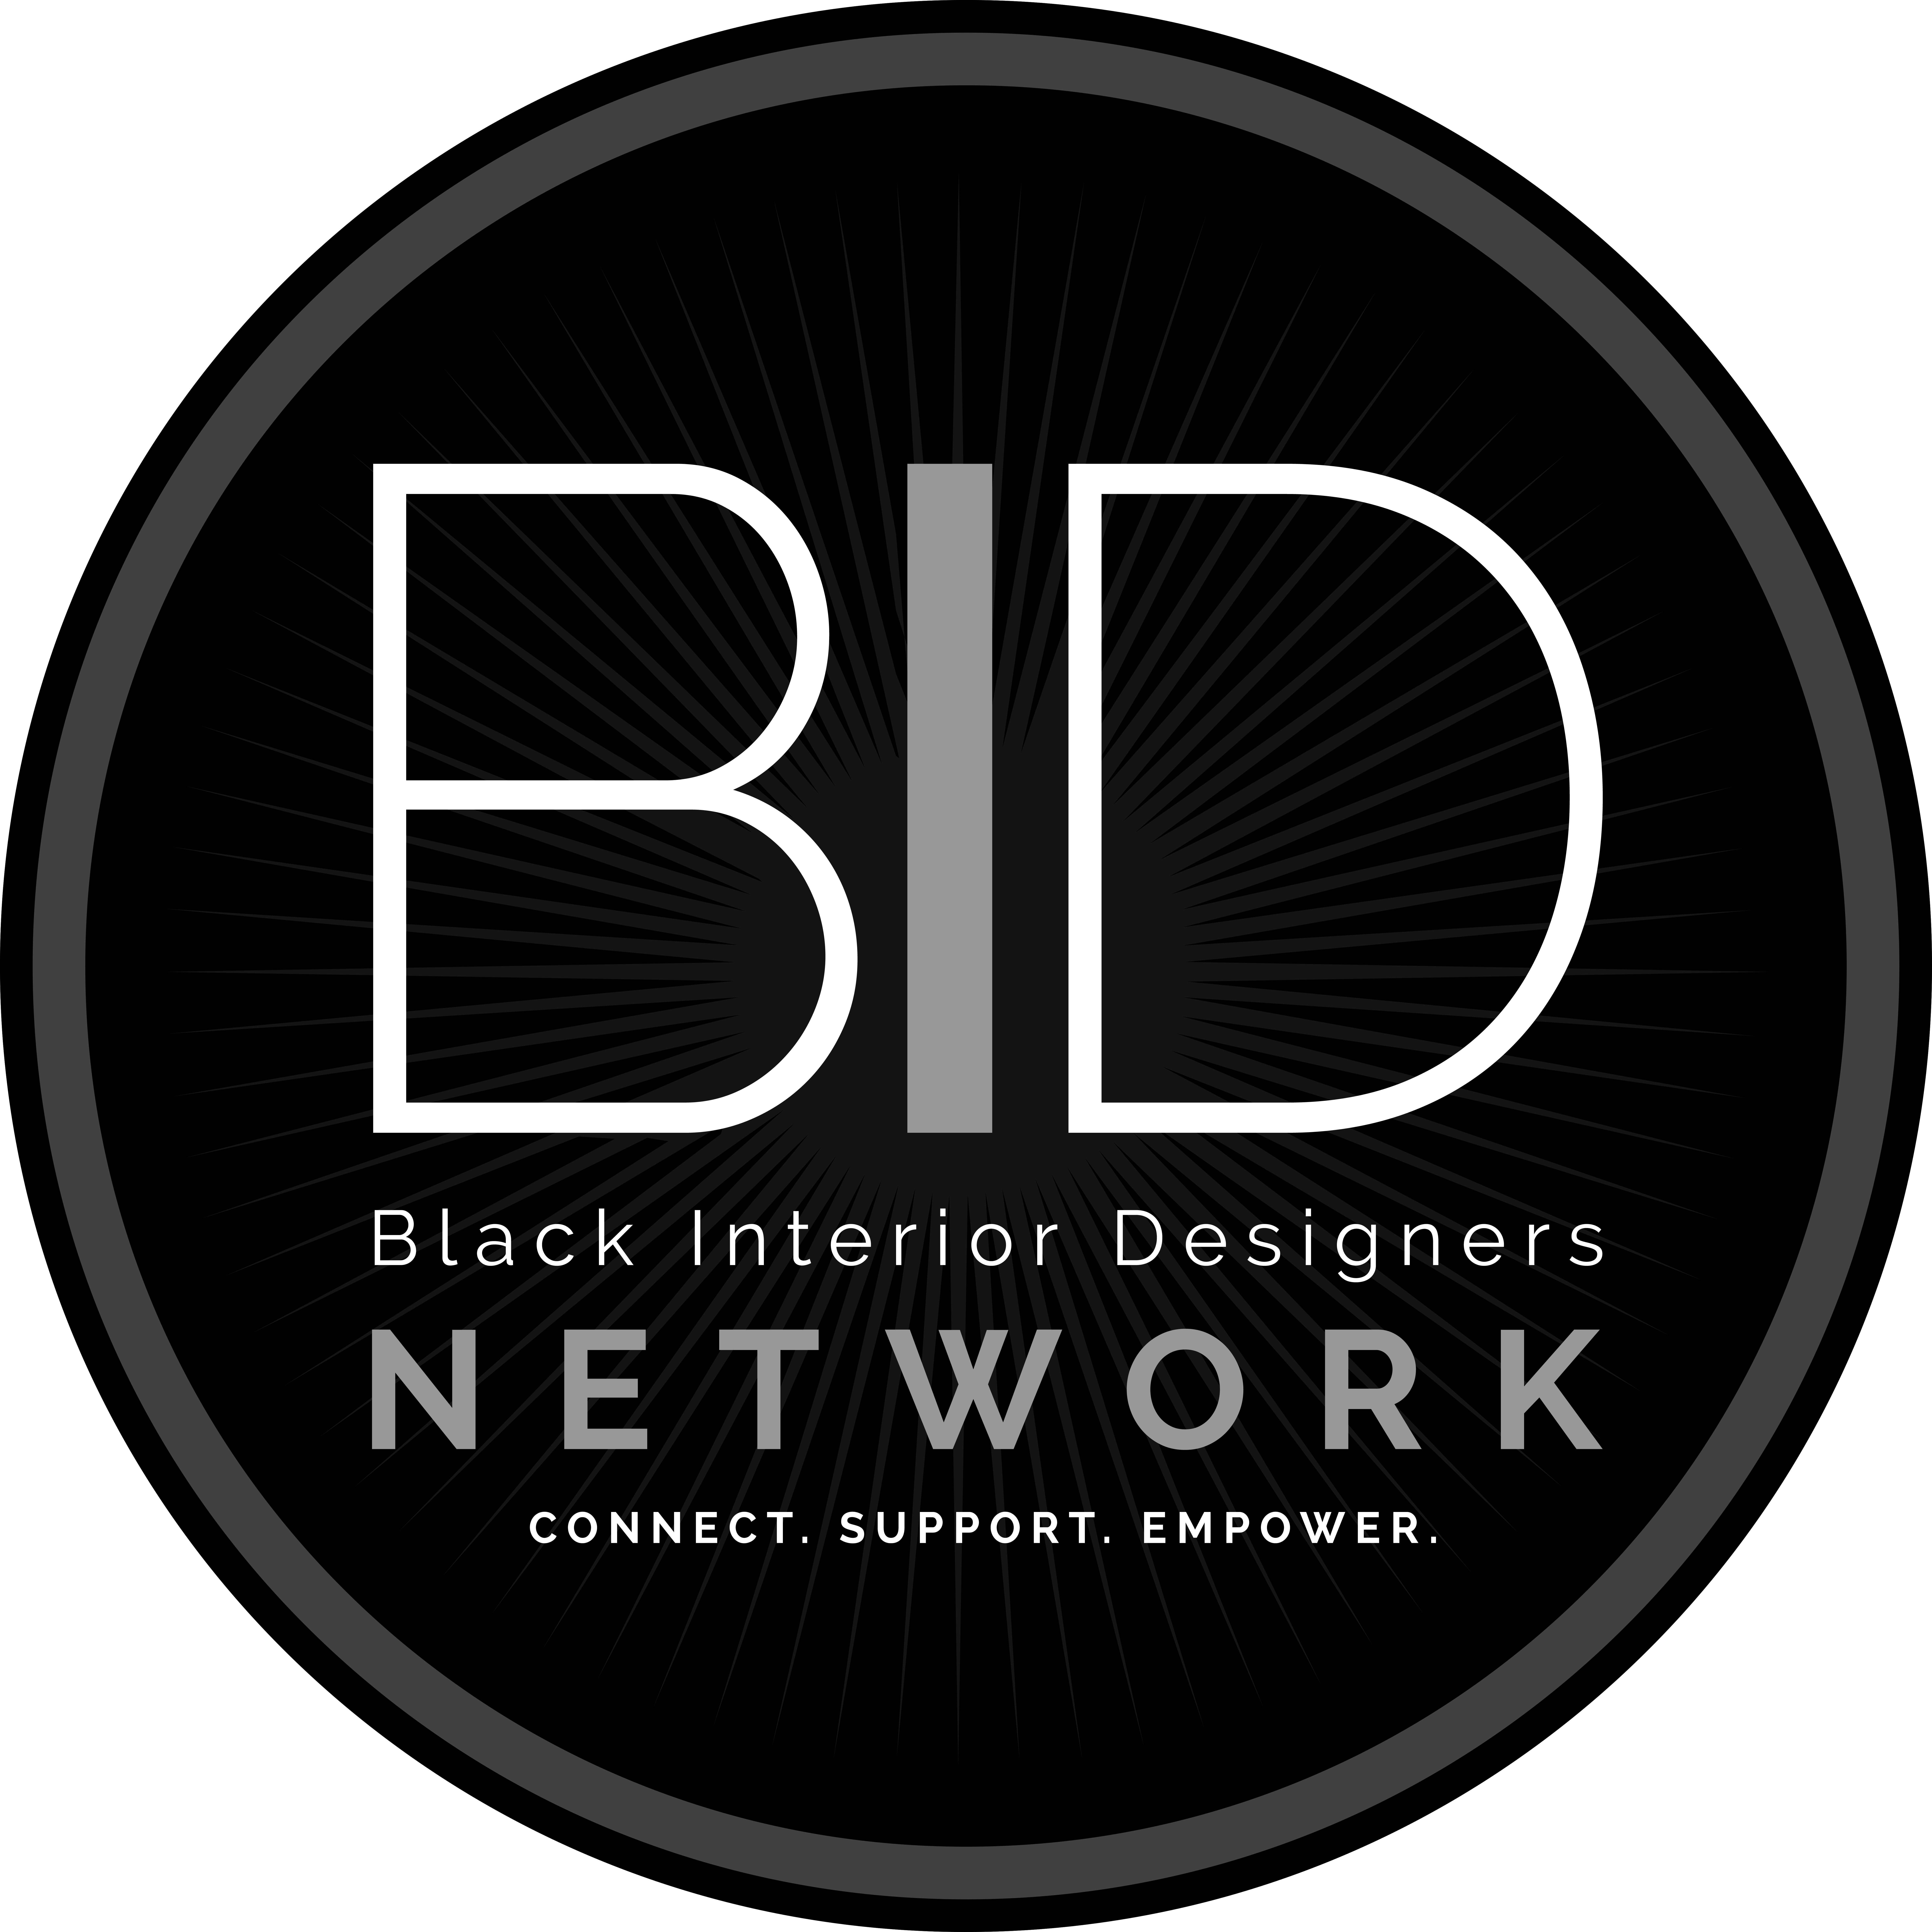 BIDN black, grey, and white logo